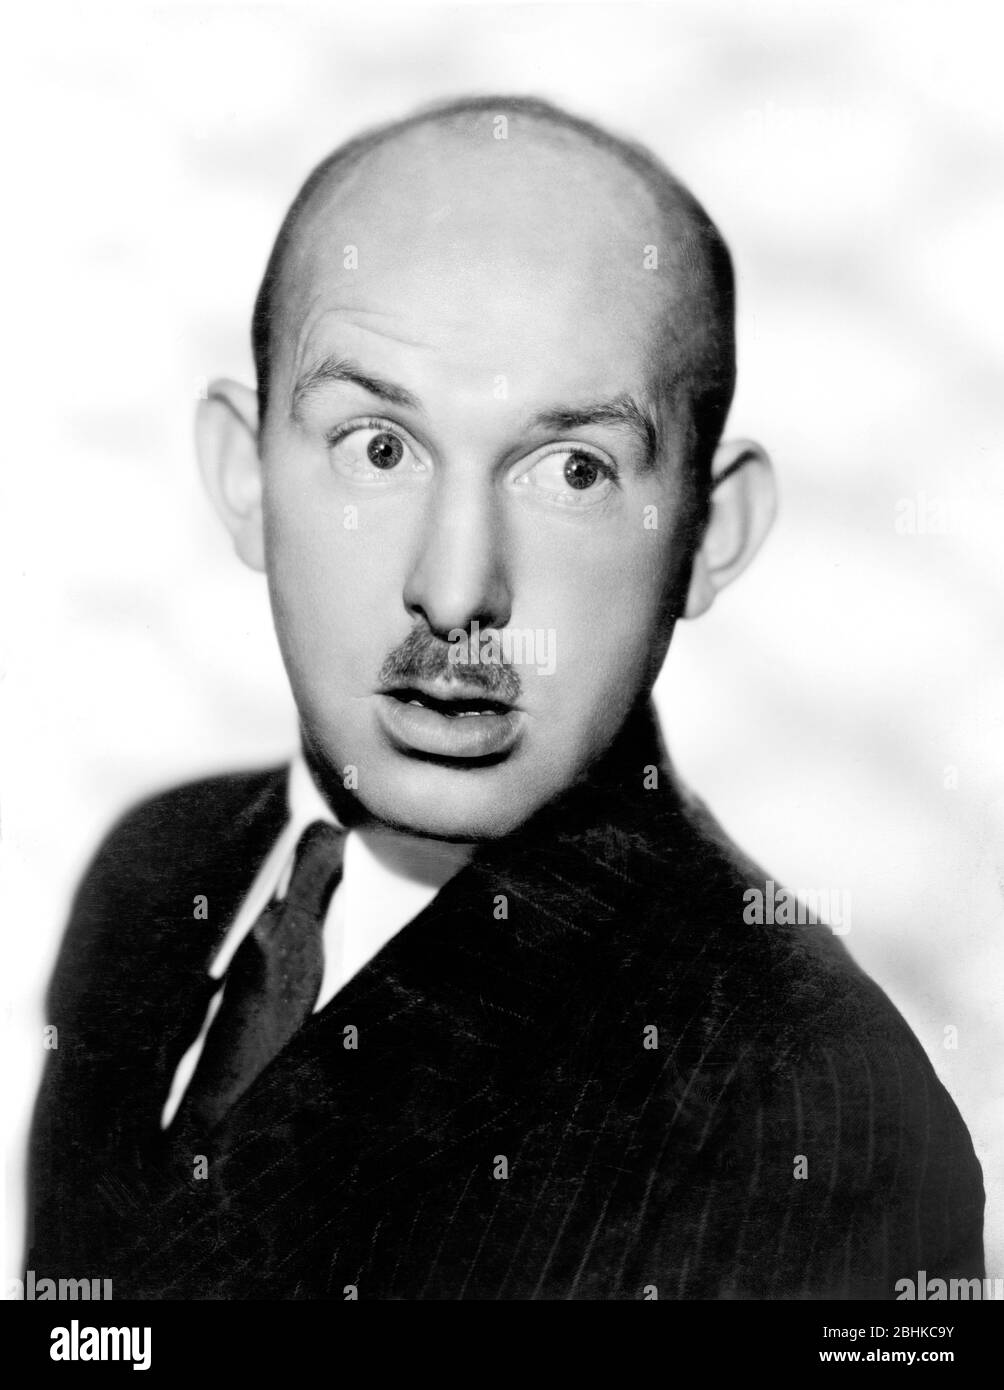 American Actor Vince Barnett (1902-1977), Head and Shoulders Publicity Portrait, 1930's Stock Photo